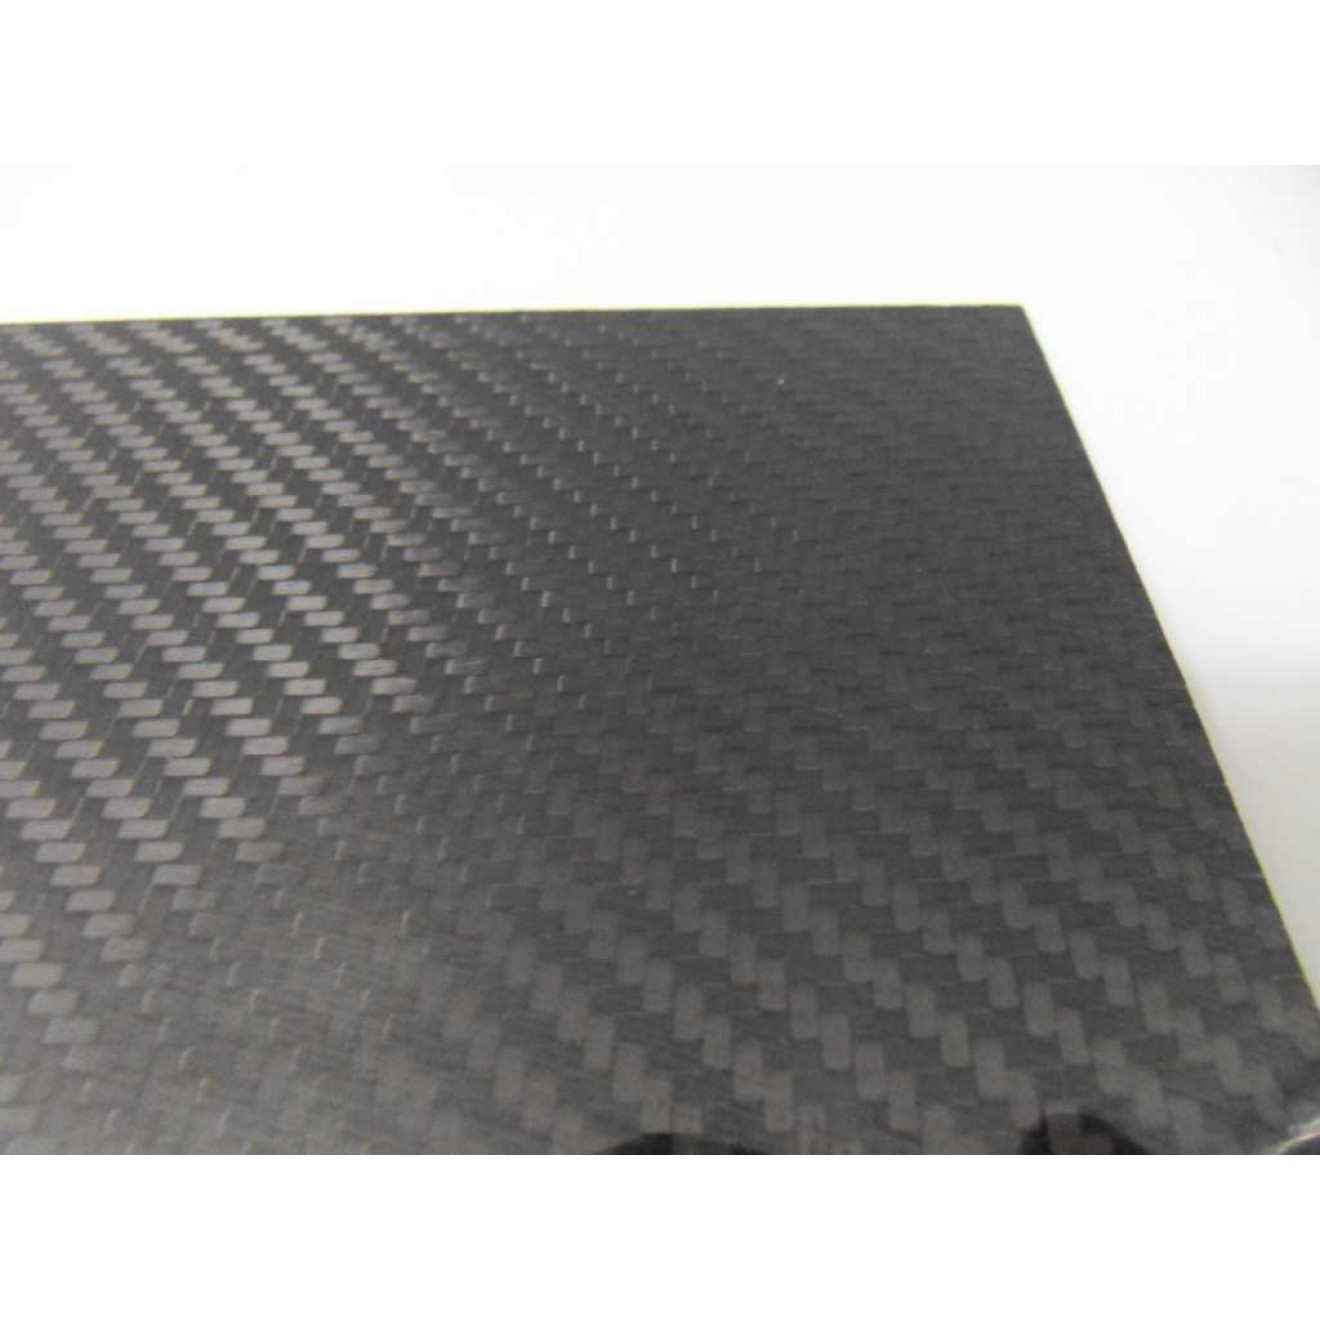 CFK-Polycarbonat-Platte 1220x540mm, umformbar bei ca. 200°C